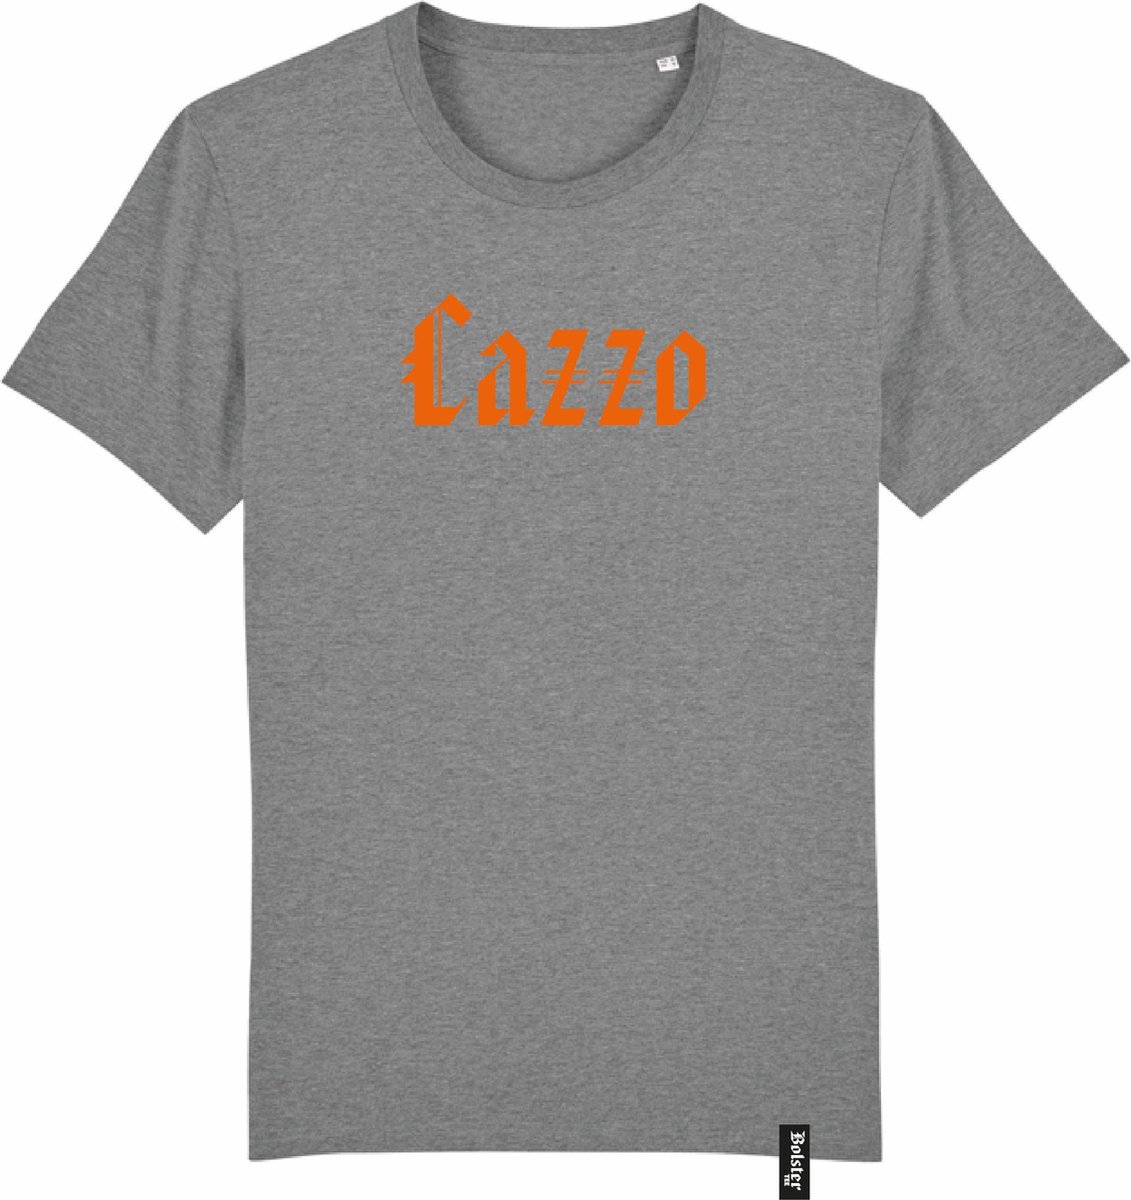 T-shirt | Bolster#0005 - Cazzo| Maat: M